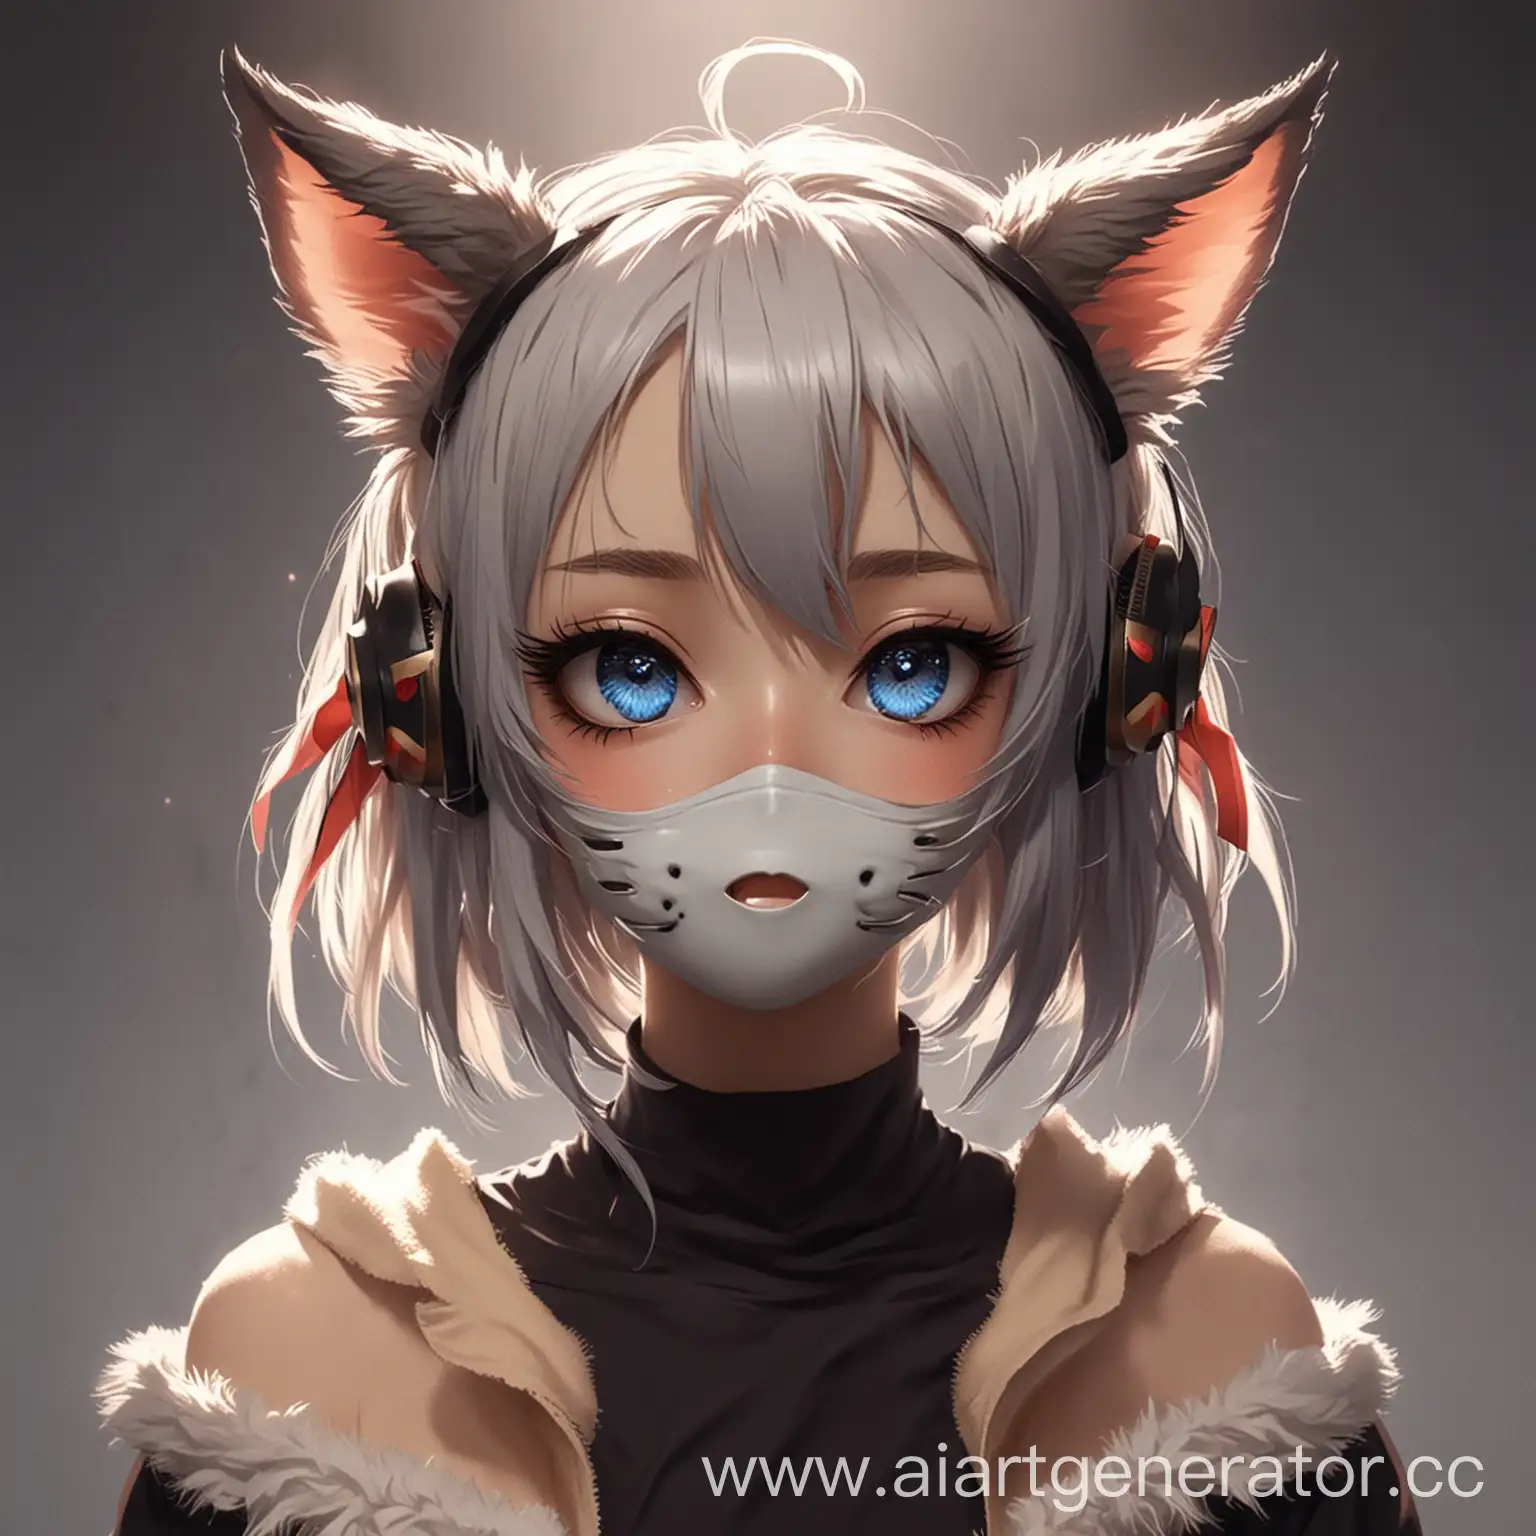 Anime-Girl-with-Mask-and-Animal-Ears-Cosplay-Portrait